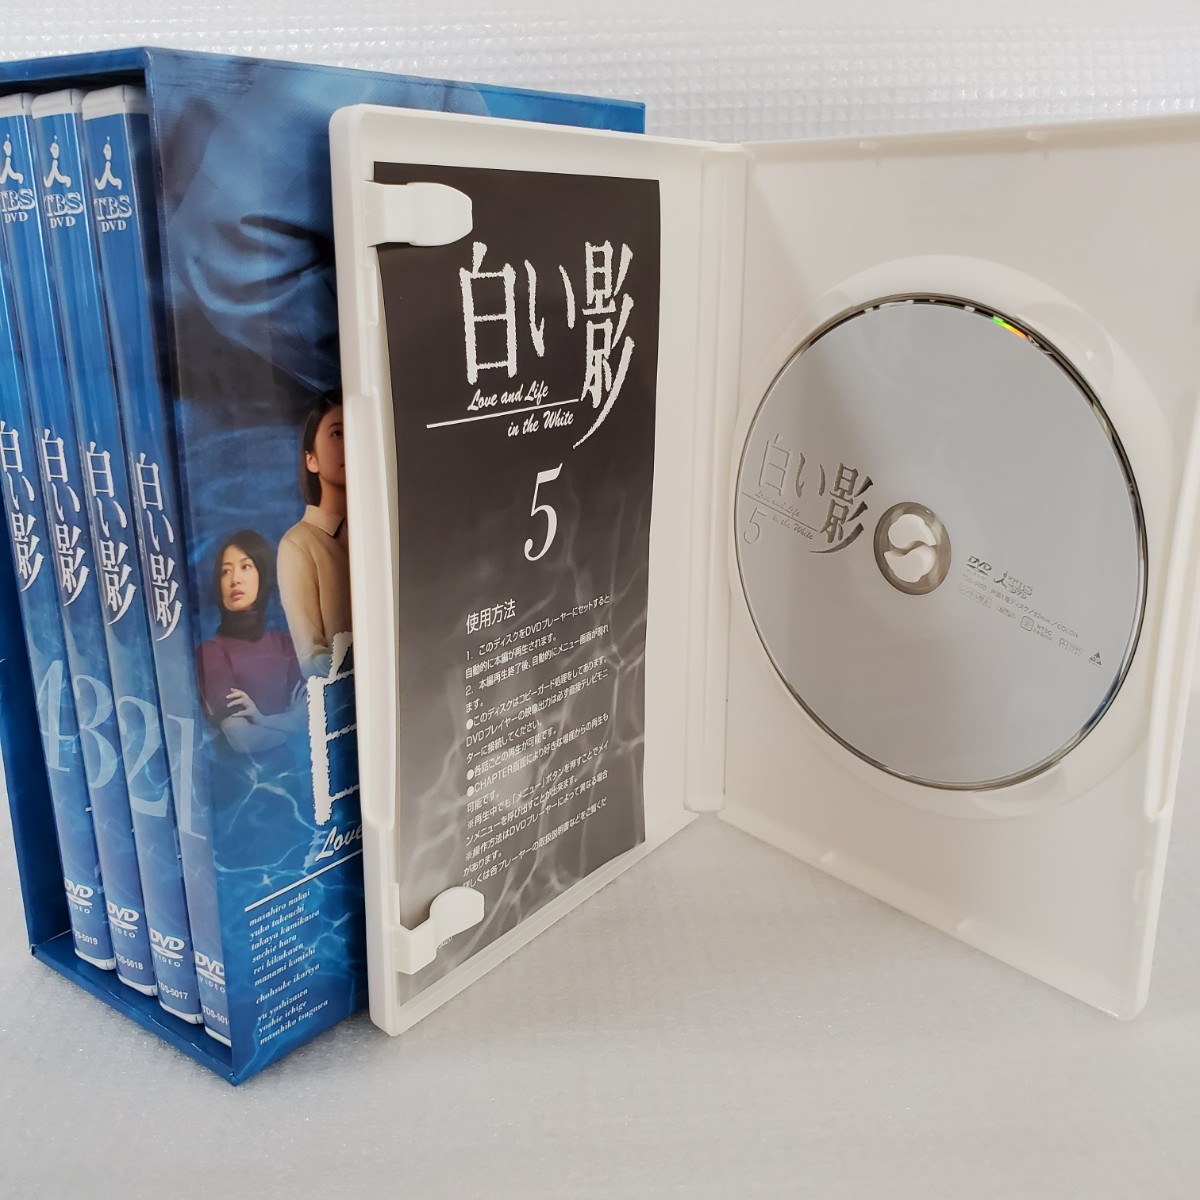 再入荷】 白い影 特製DVD-BOXセット【初回限定盤 国内正規品】 - 邦画 